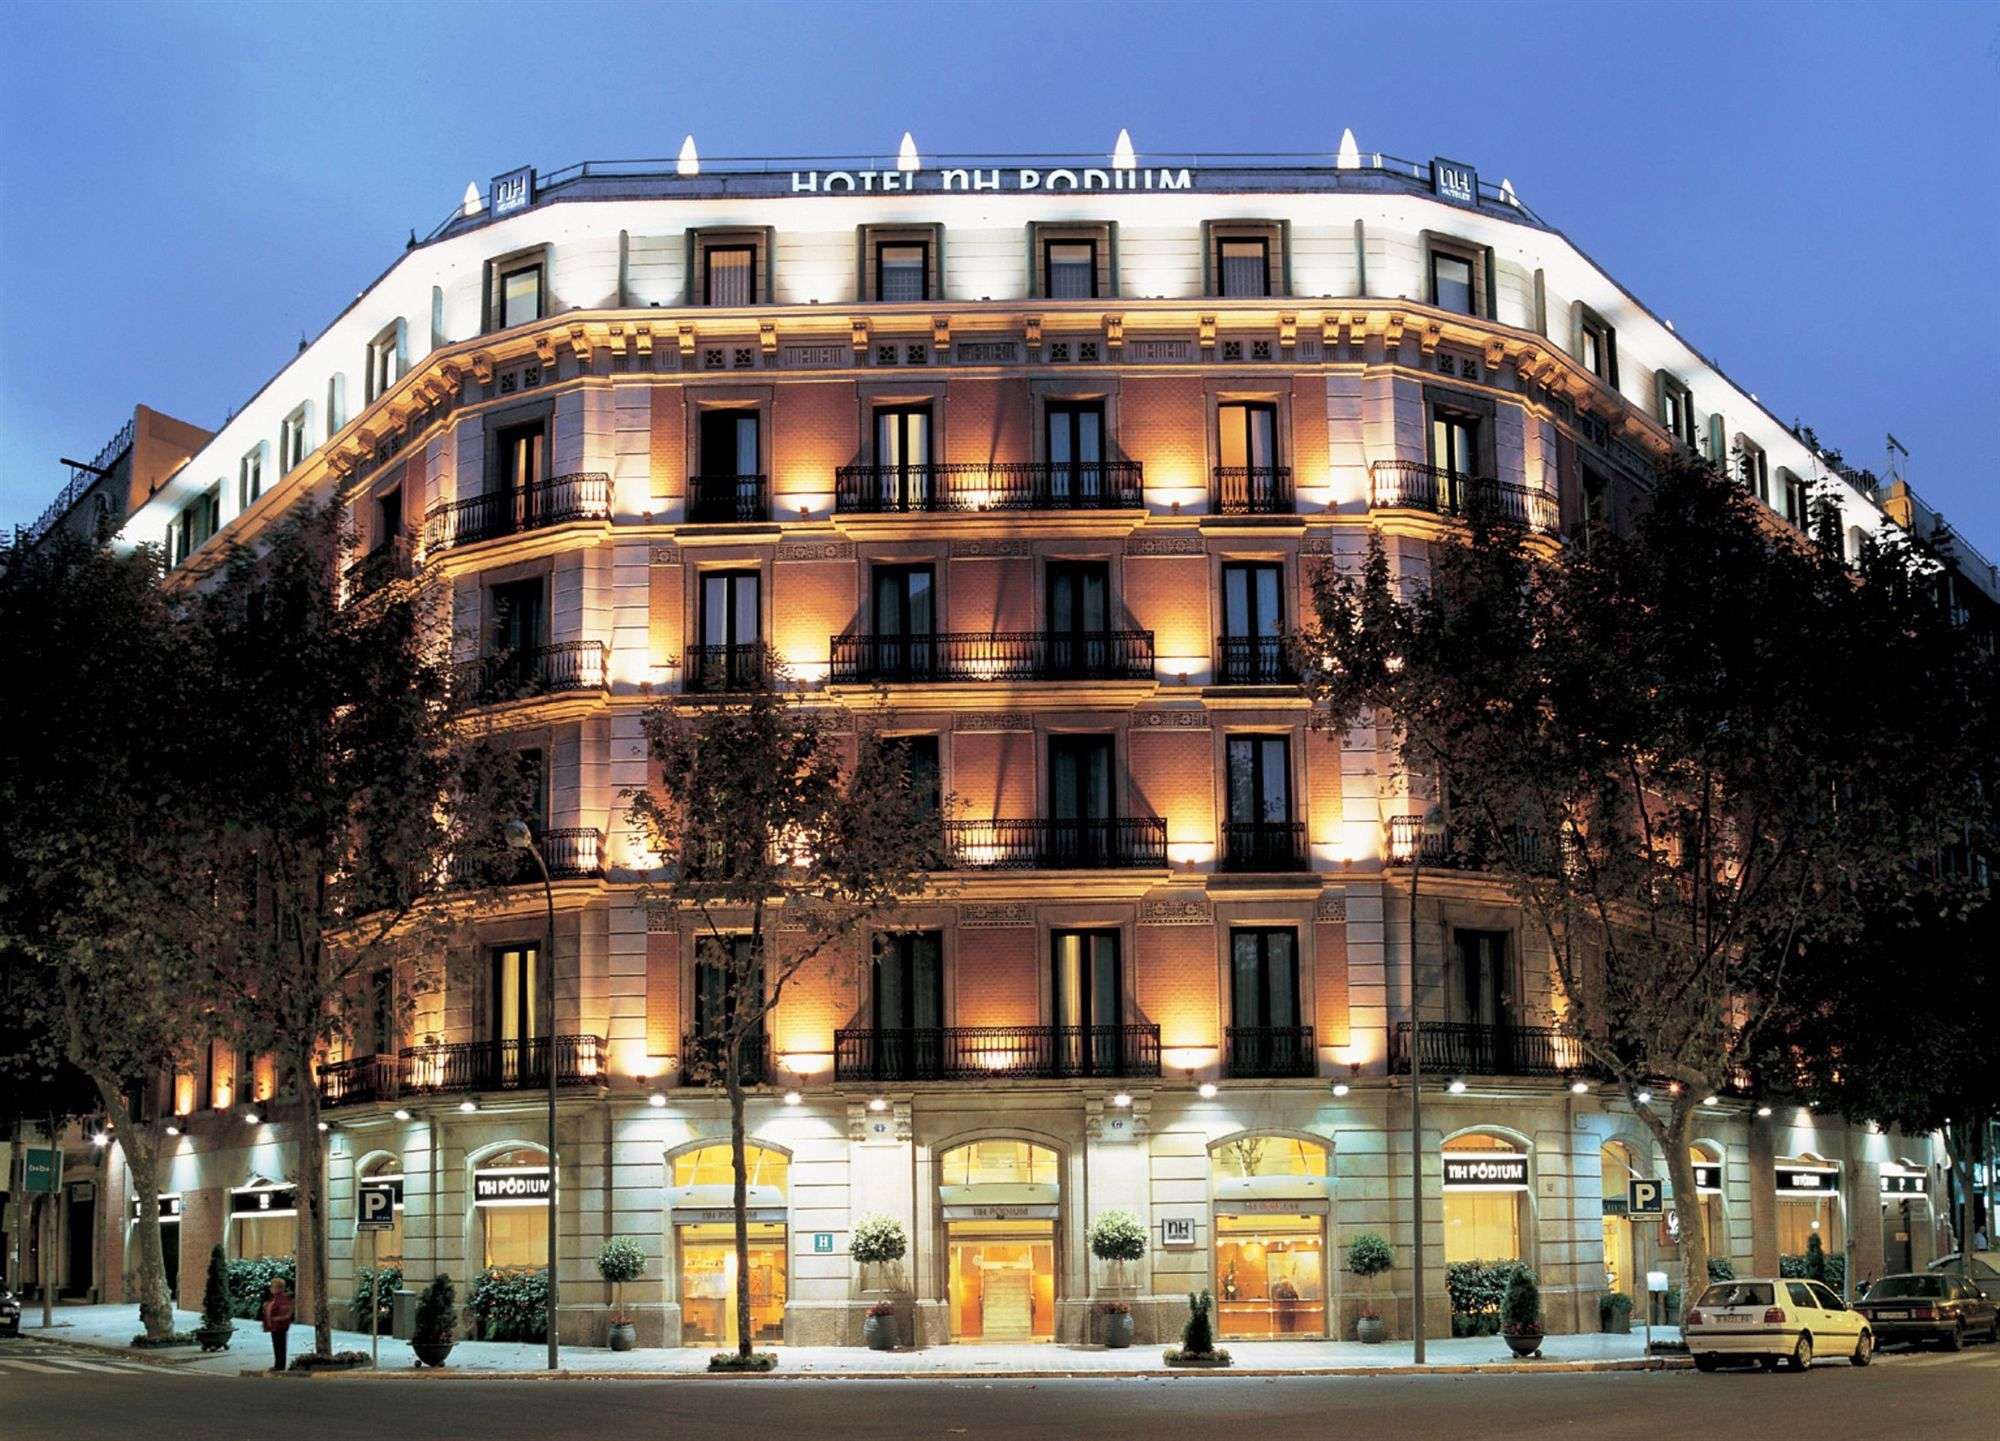 Fachadad Hotel NH Pódium Barcelona